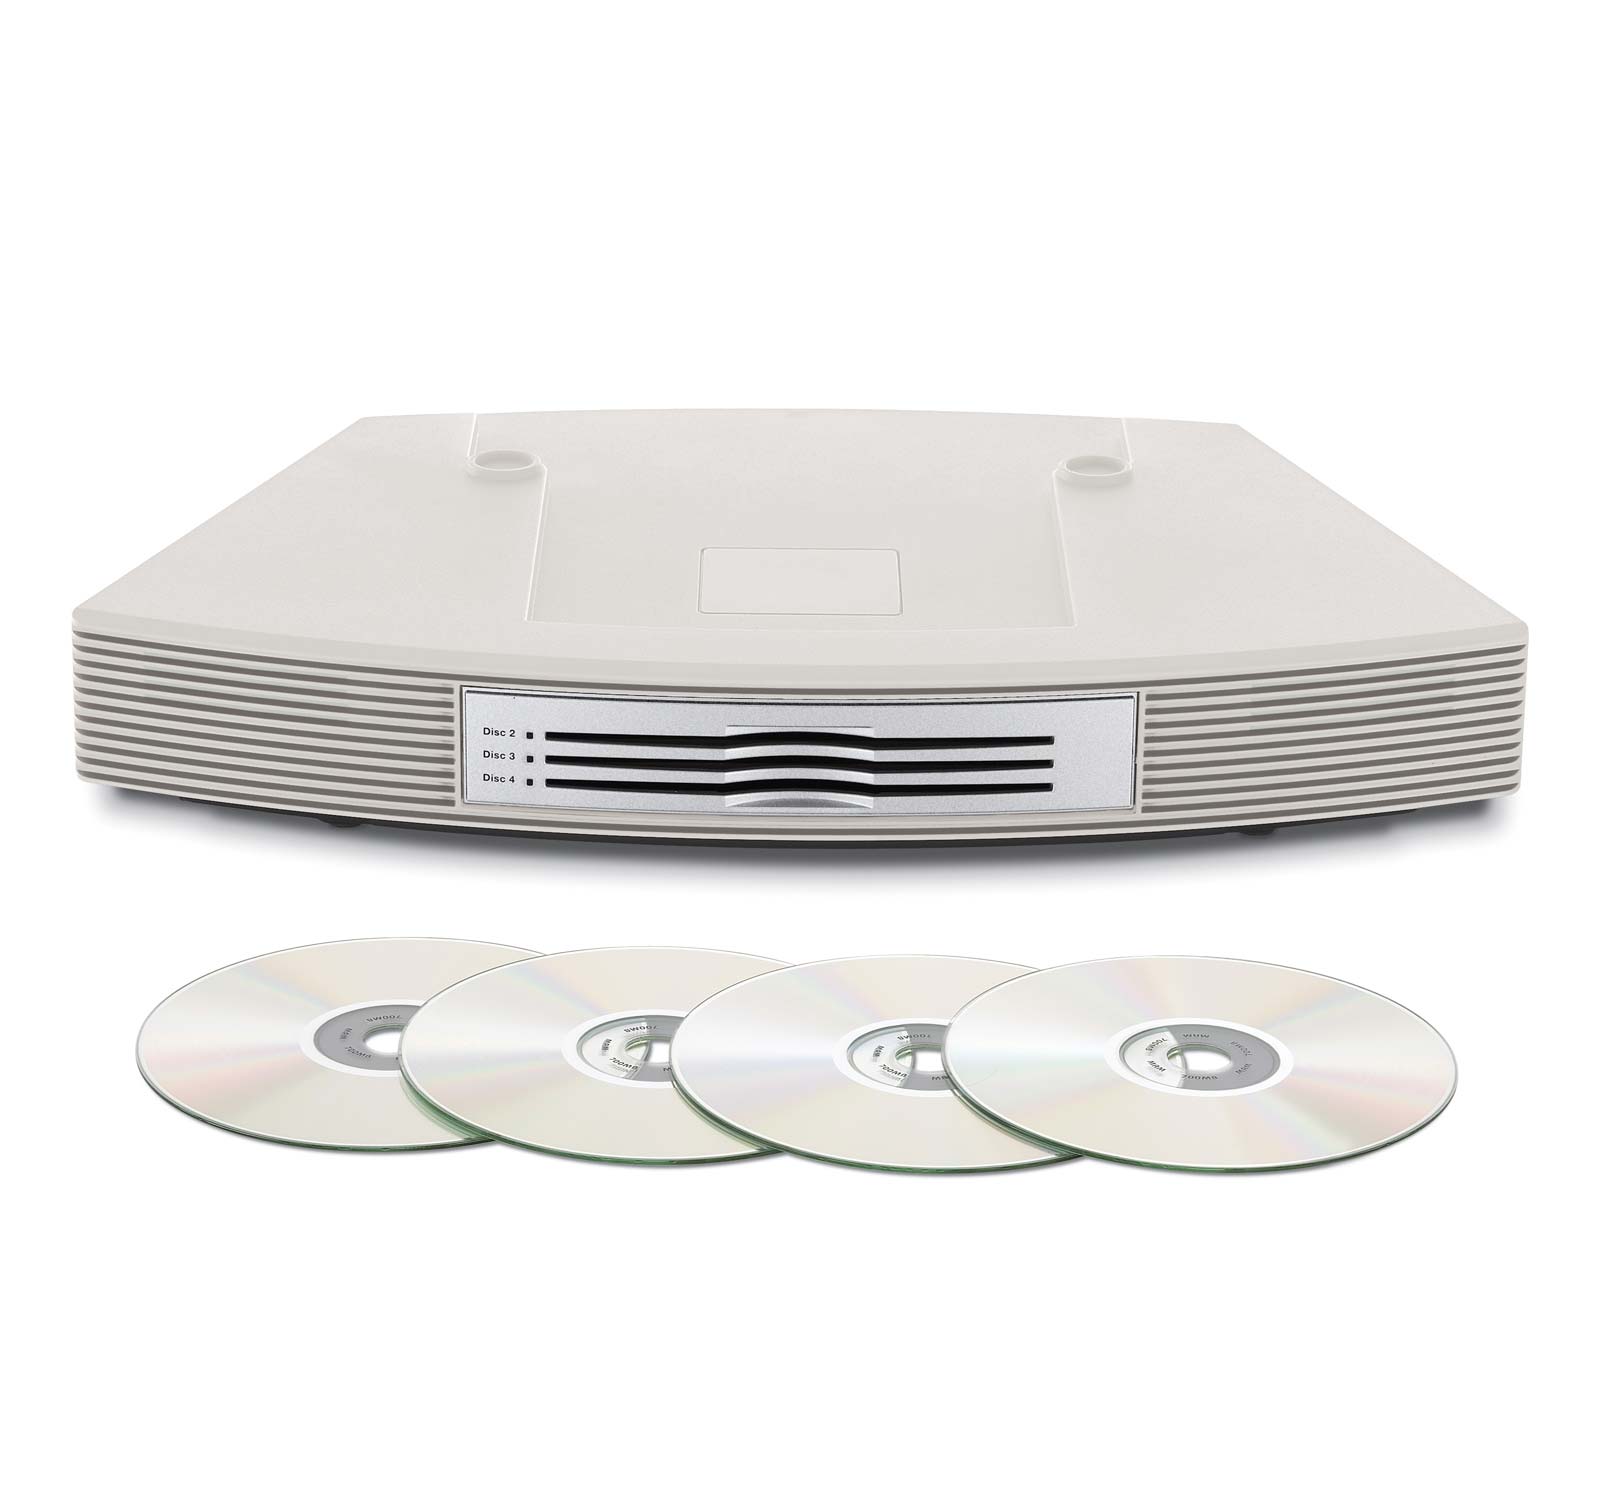 Bose Wave Music System multi-CD changer Platinum White | eBay